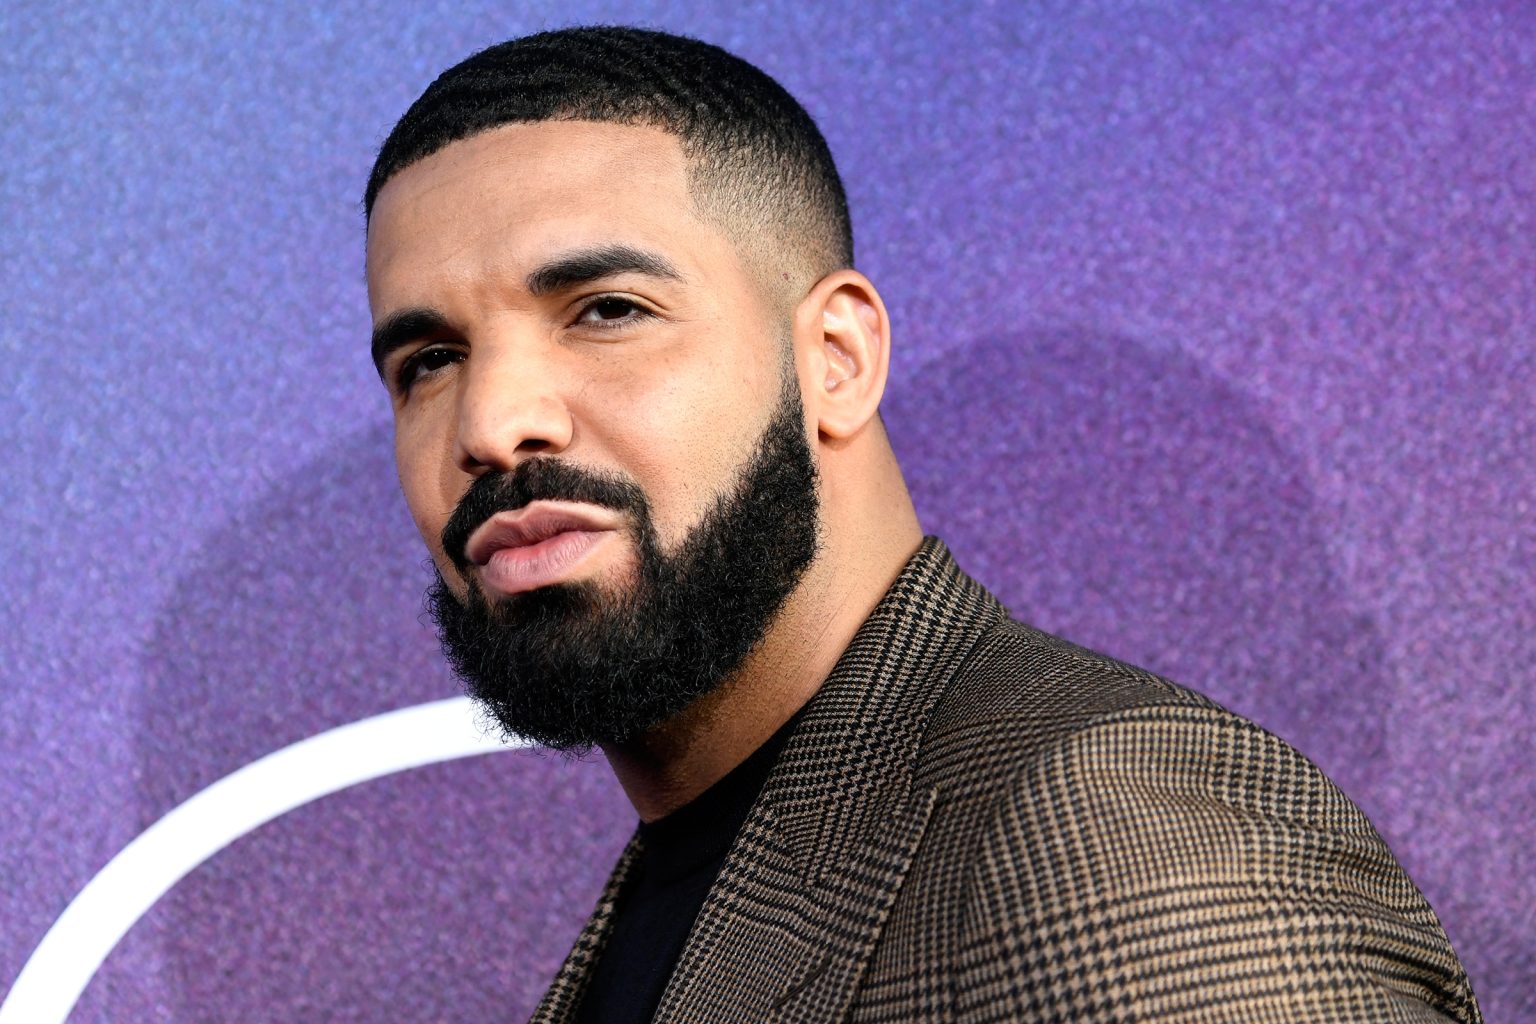 Canadian Rapper Drake booed at Limp Bizkit concert after Fred Durst introduction